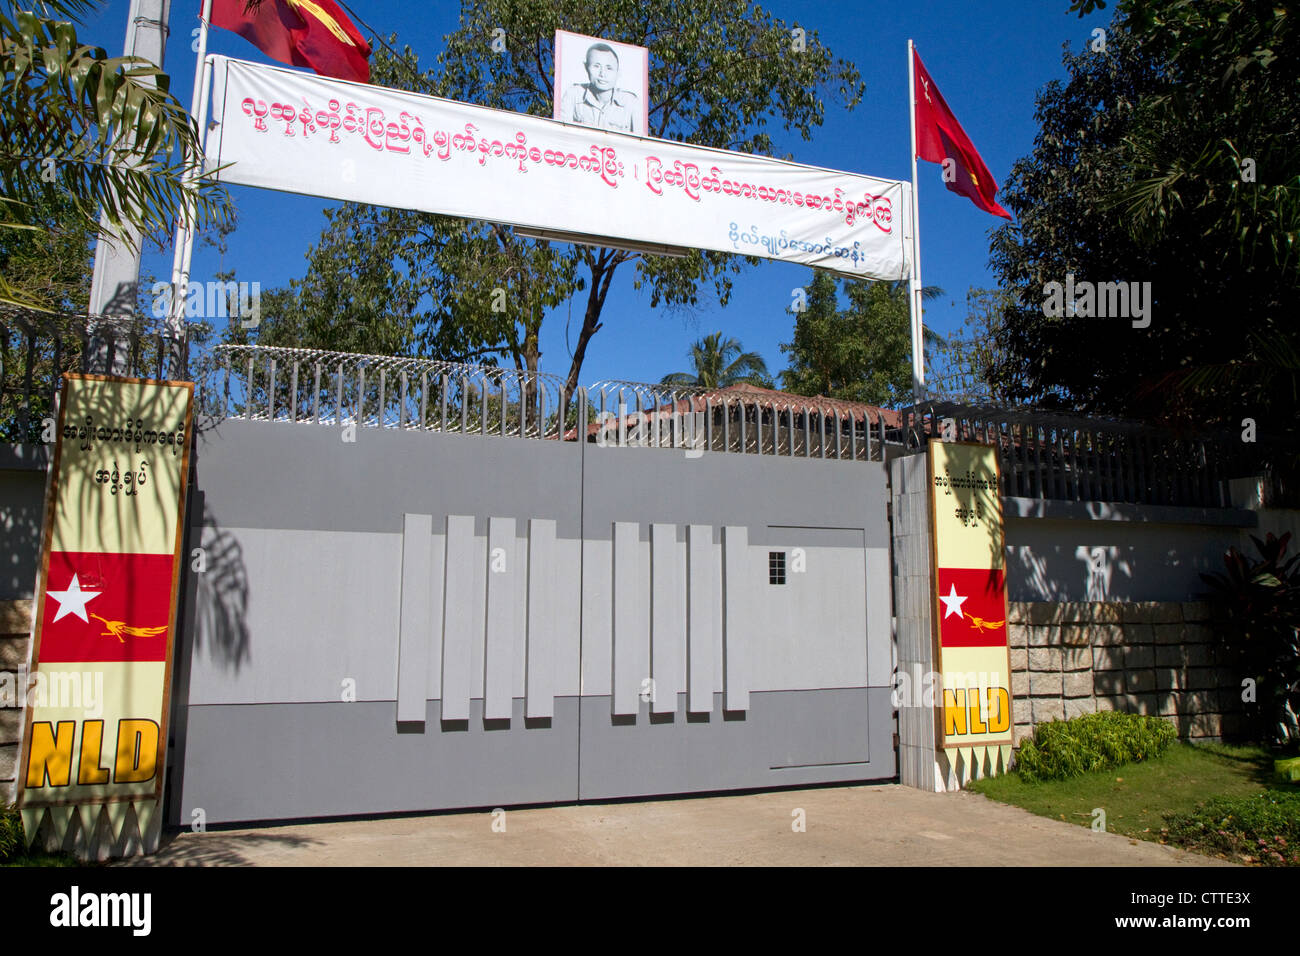 Gated entrance to the residence of Burmese opposition politician Aung San Suu Kyi in (Rangoon) Yangon, (Burma) Myanmar. Stock Photo